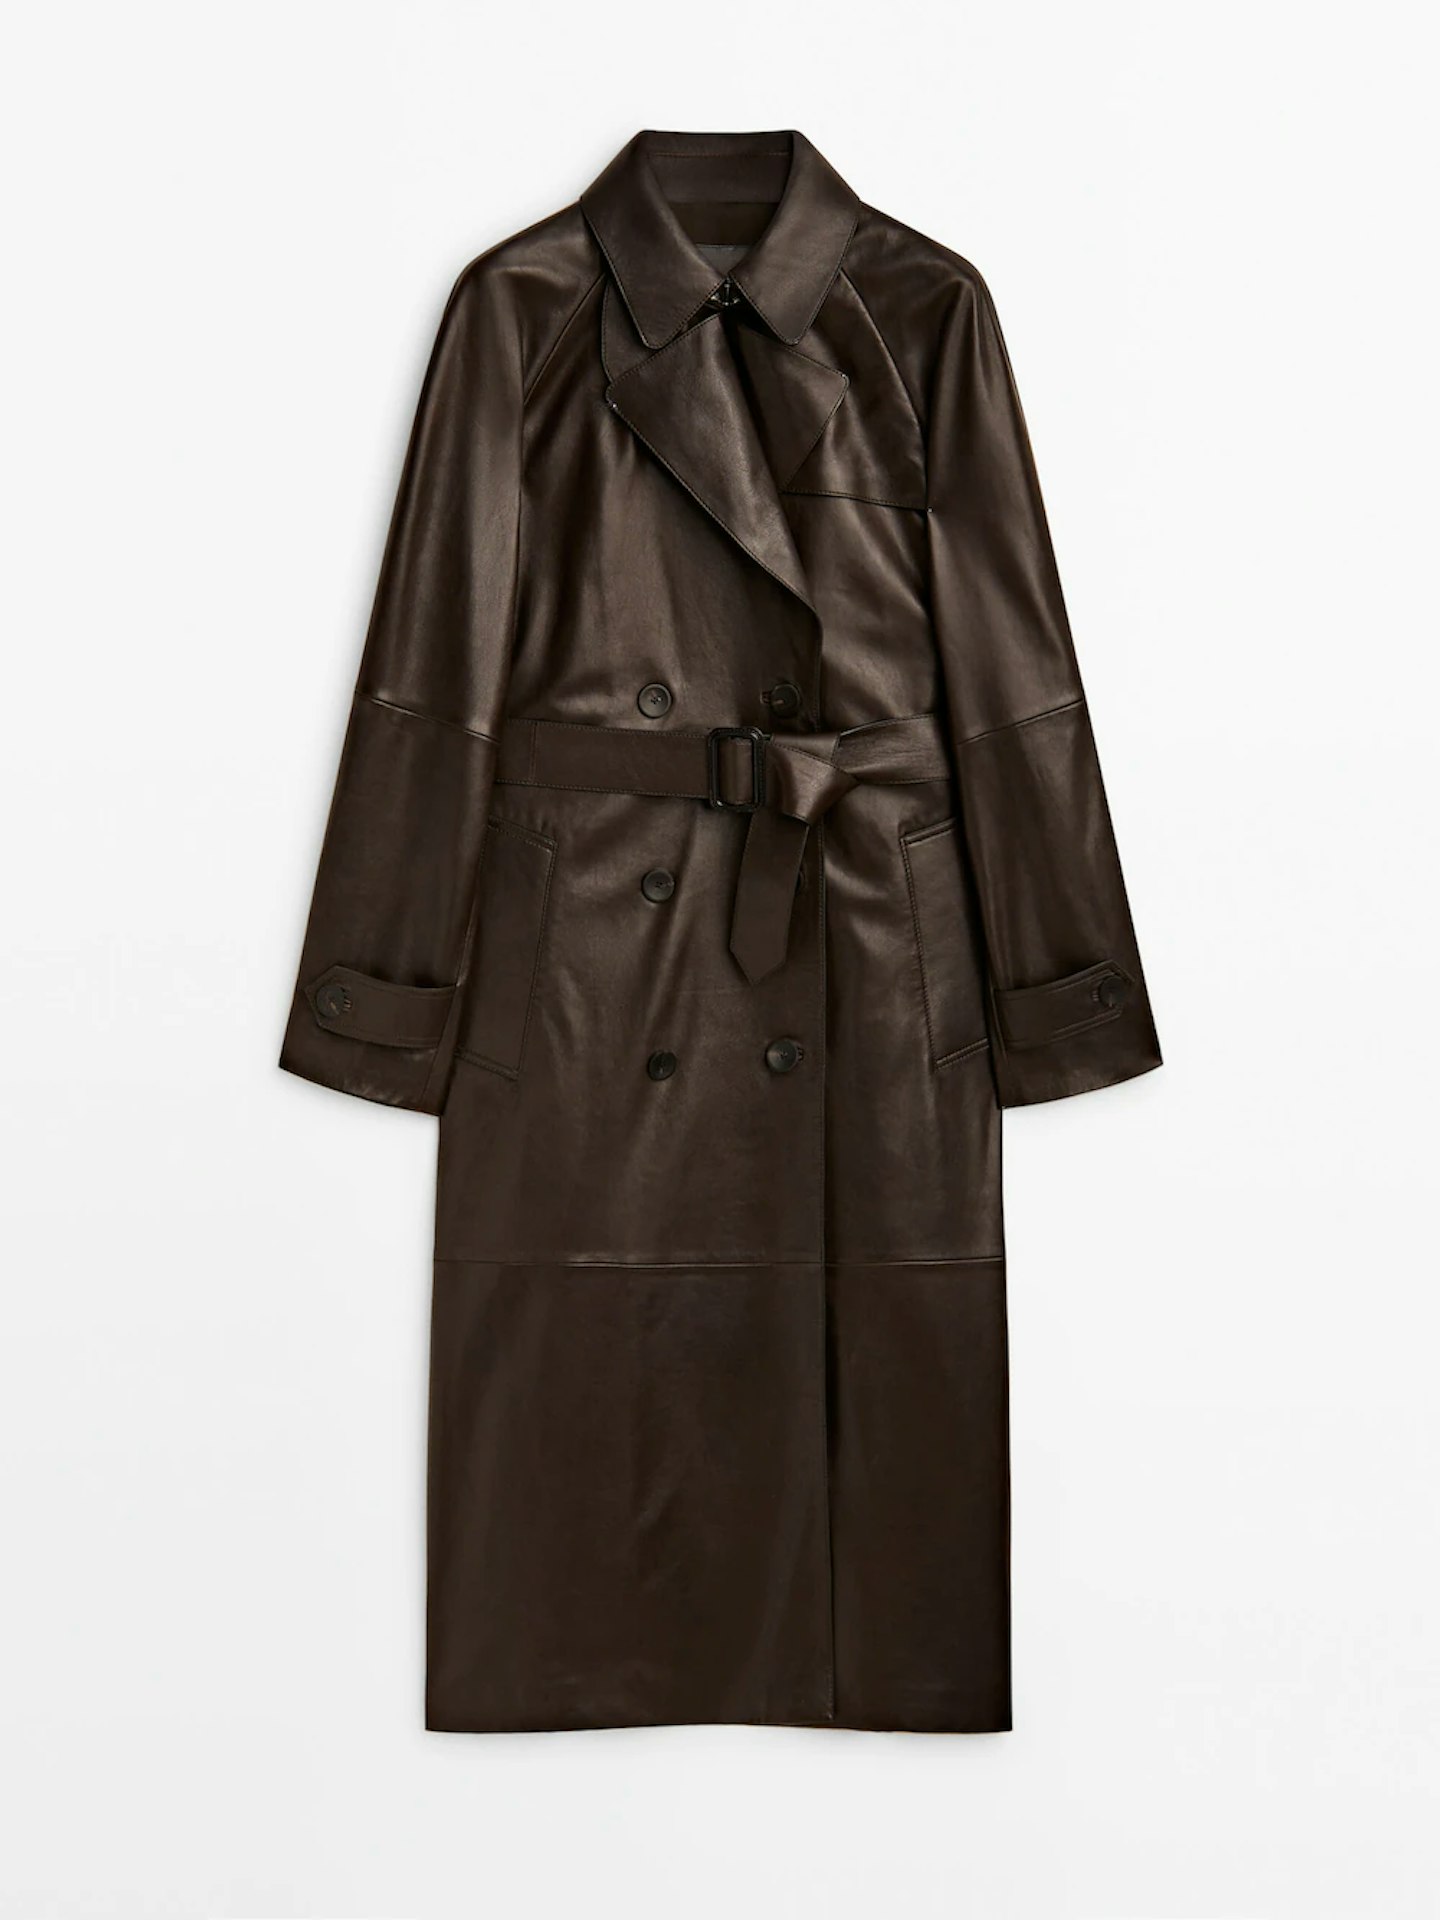 Massimo Dutti, Nappa Leather Trench-style Coat